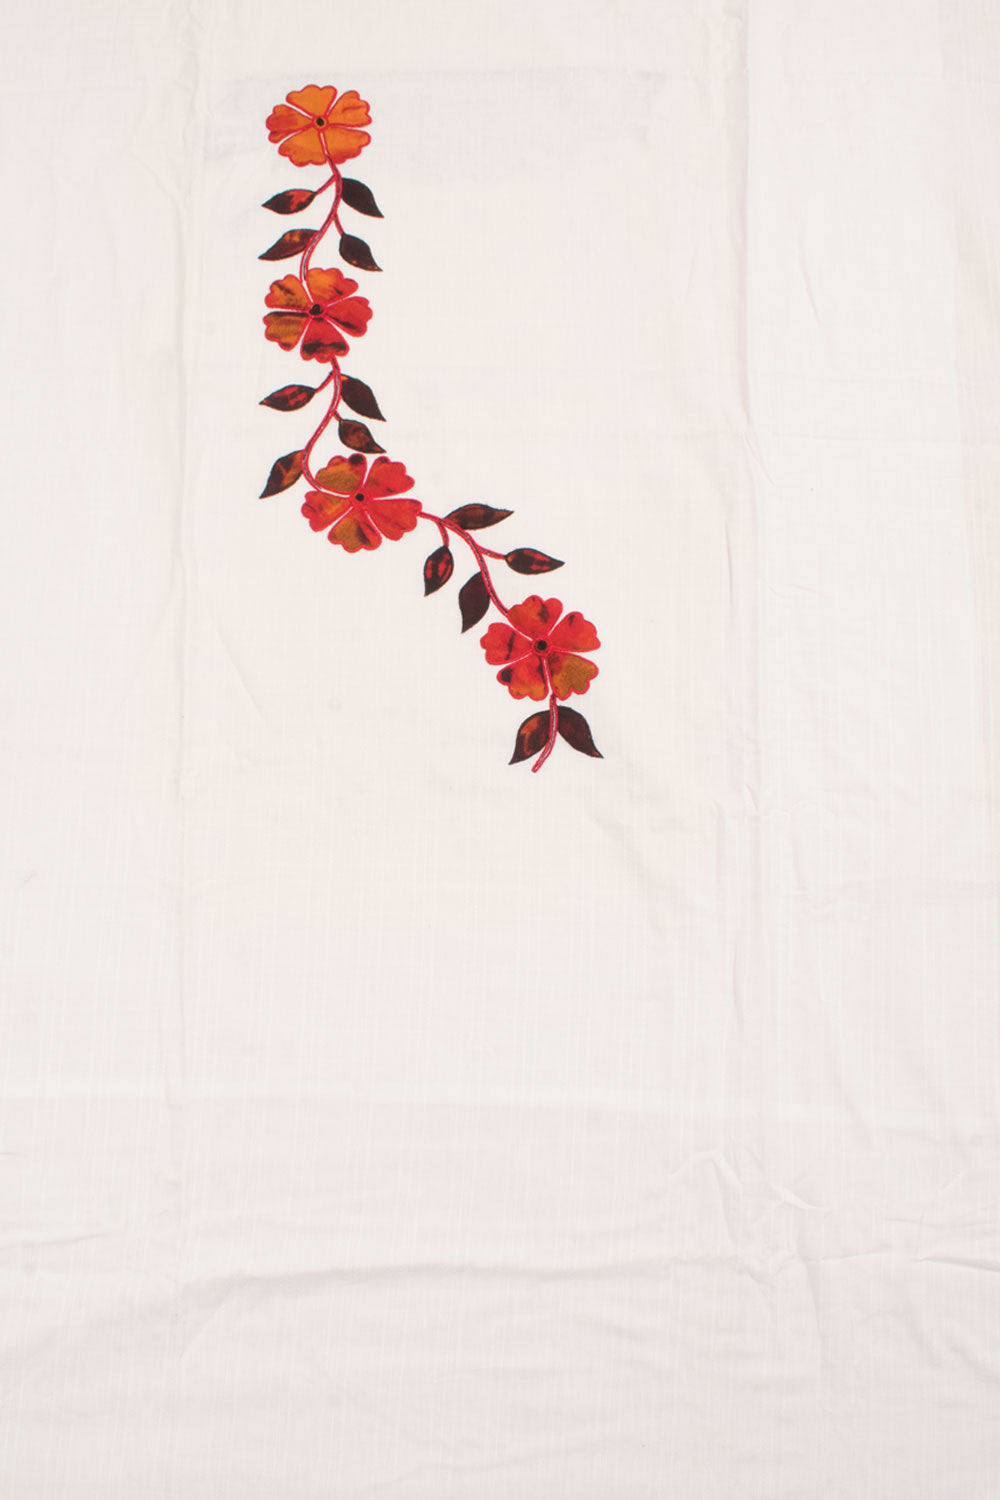 Applique Embroidered Cotton 3-Piece Salwar Suit Material 10056961